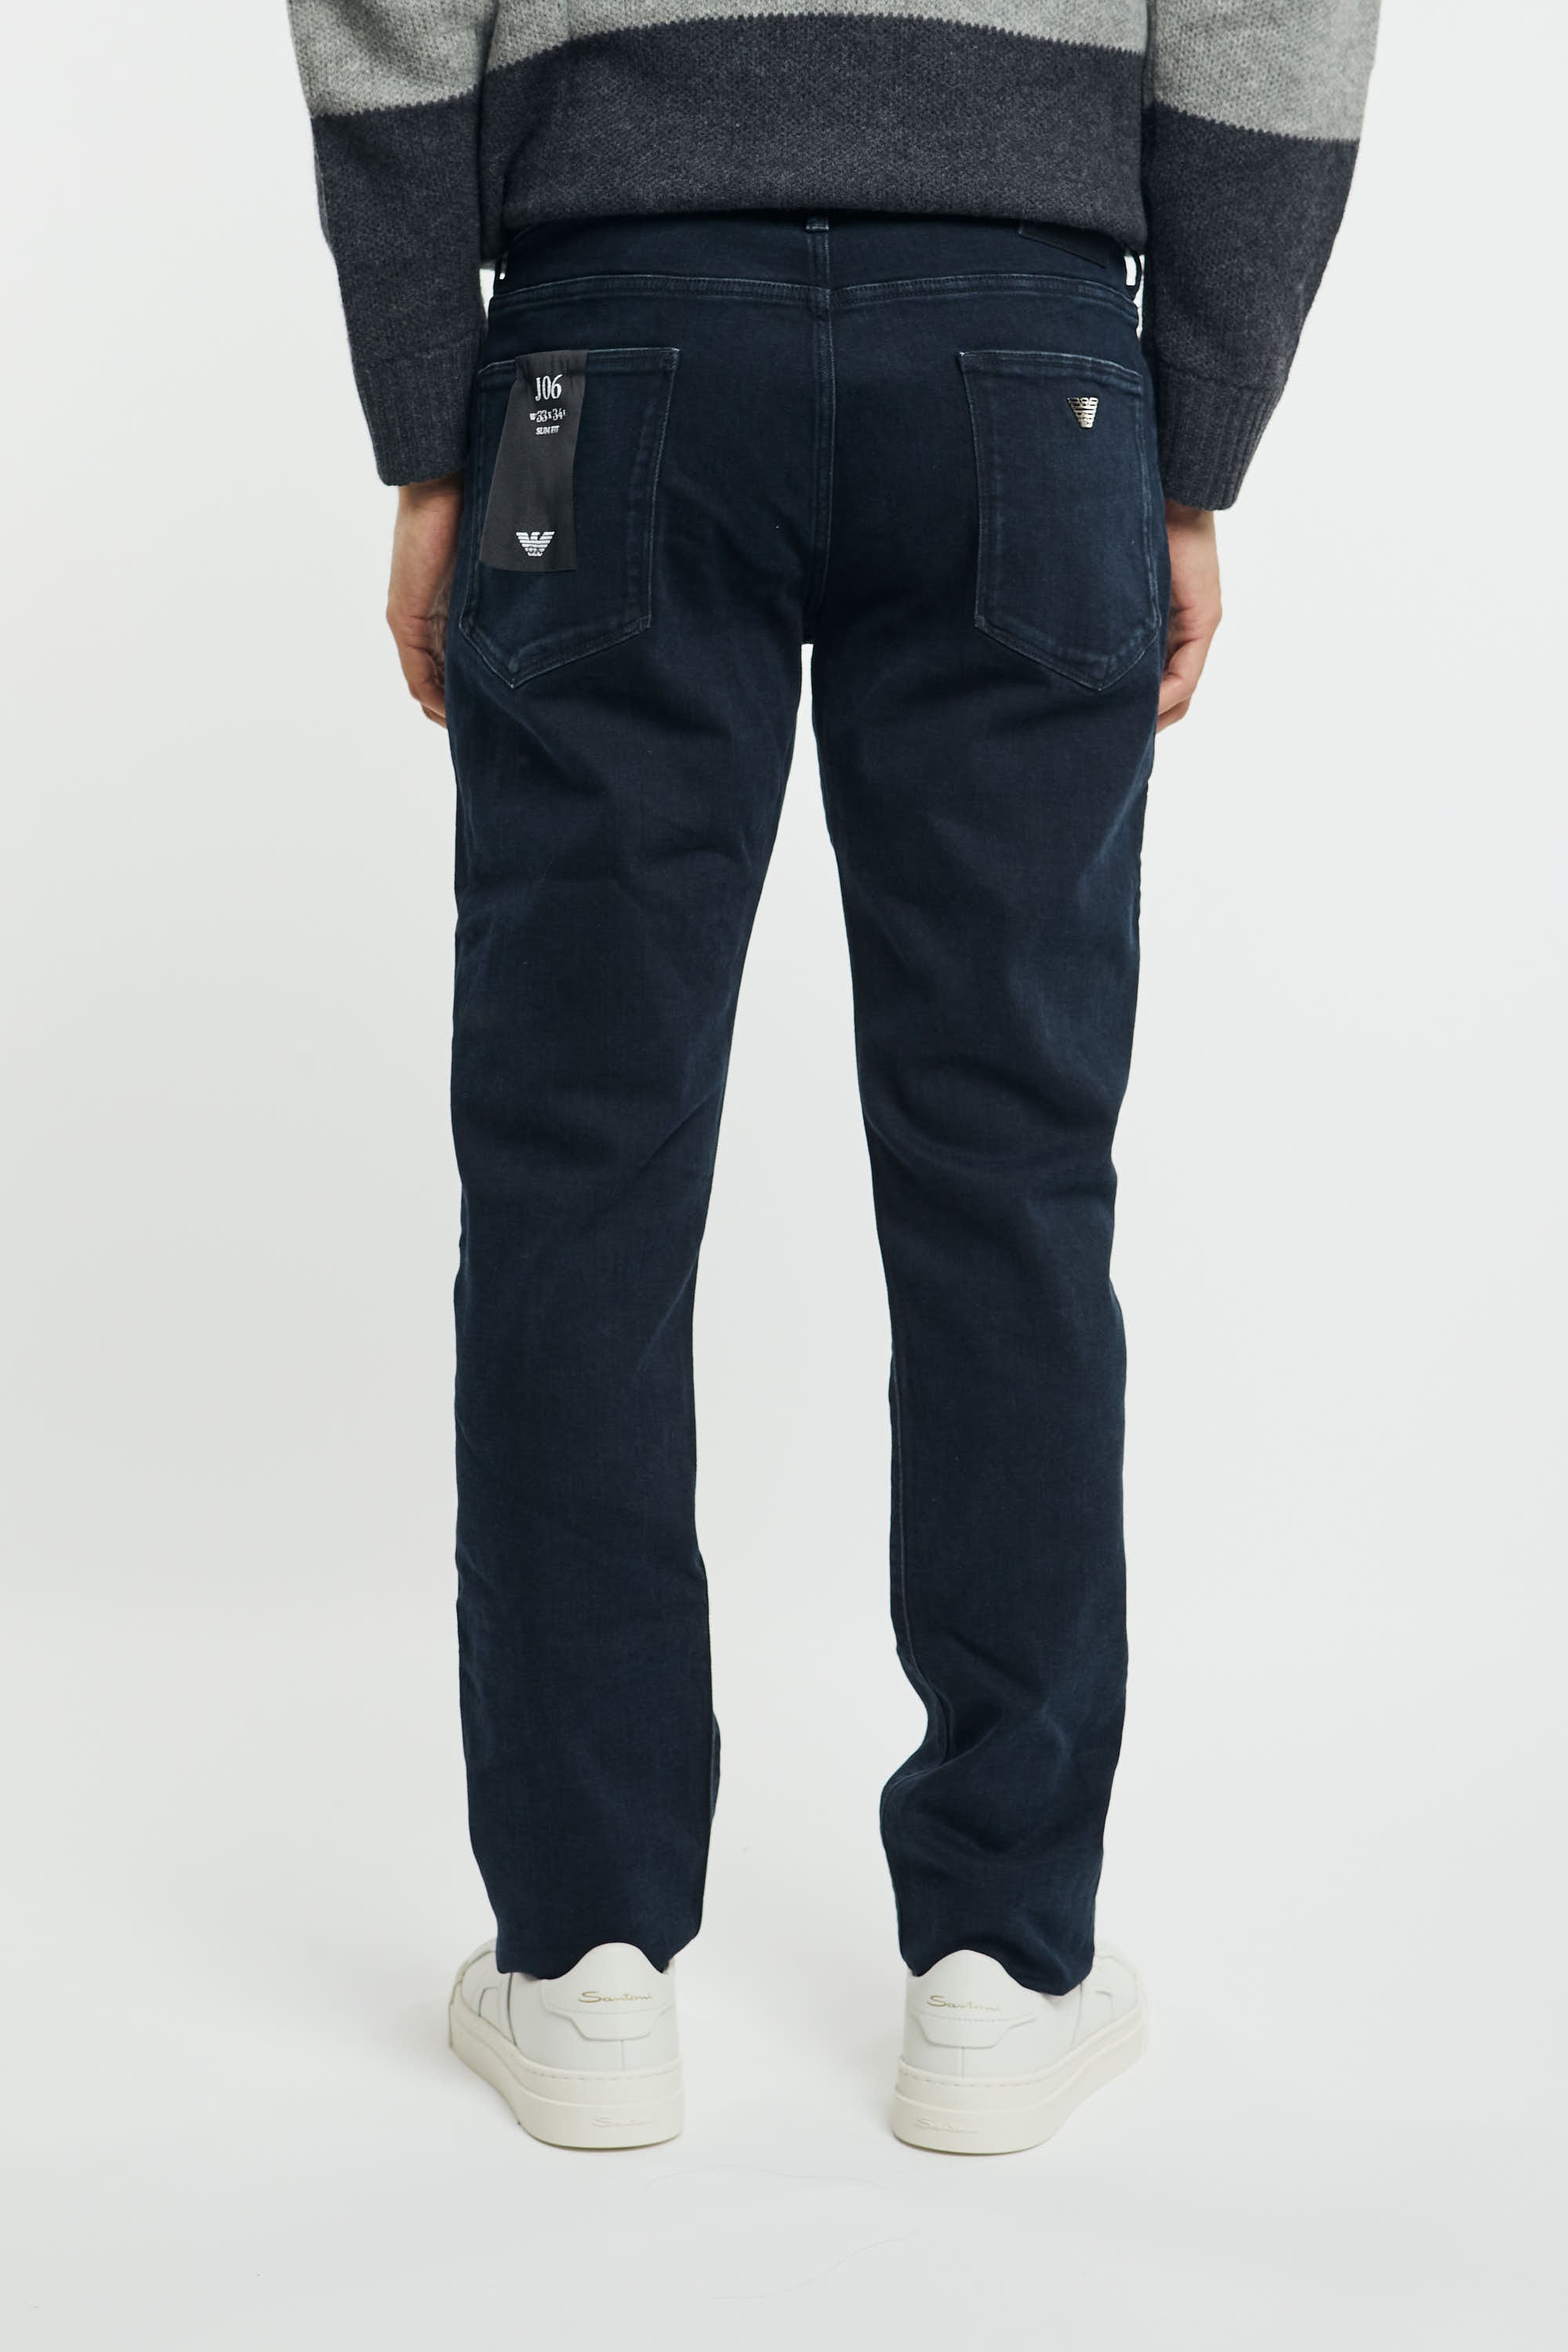 Emporio Armani Jeans J06 Slim Fit in Blue Stretch Cotton Denim-6